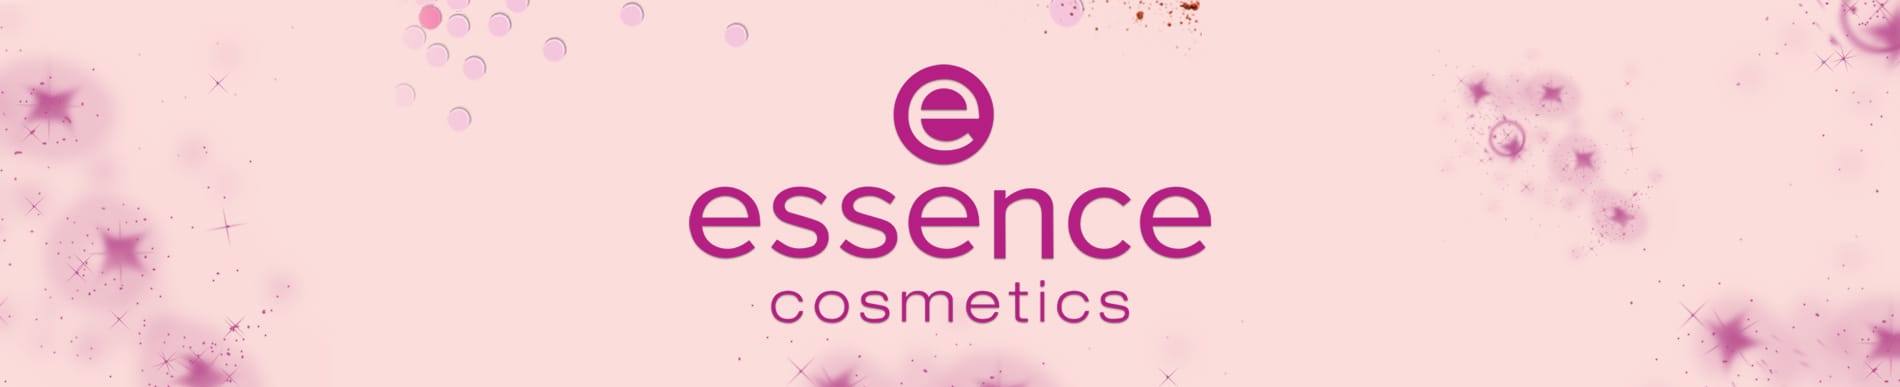 Essence Brand Page